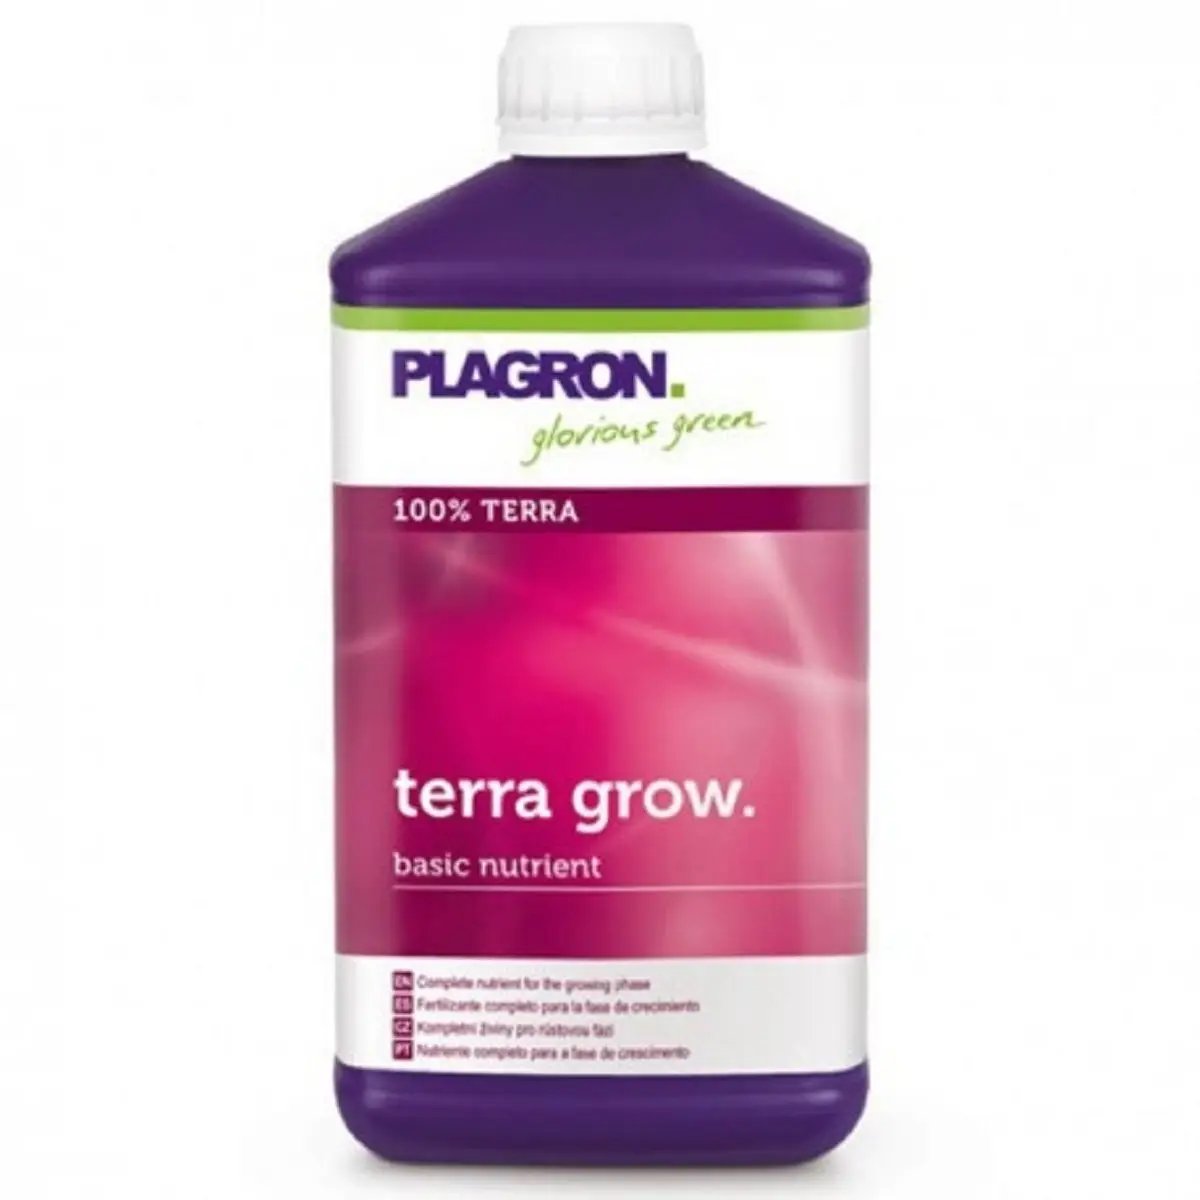 Plagron Terra Grow 1 Litre